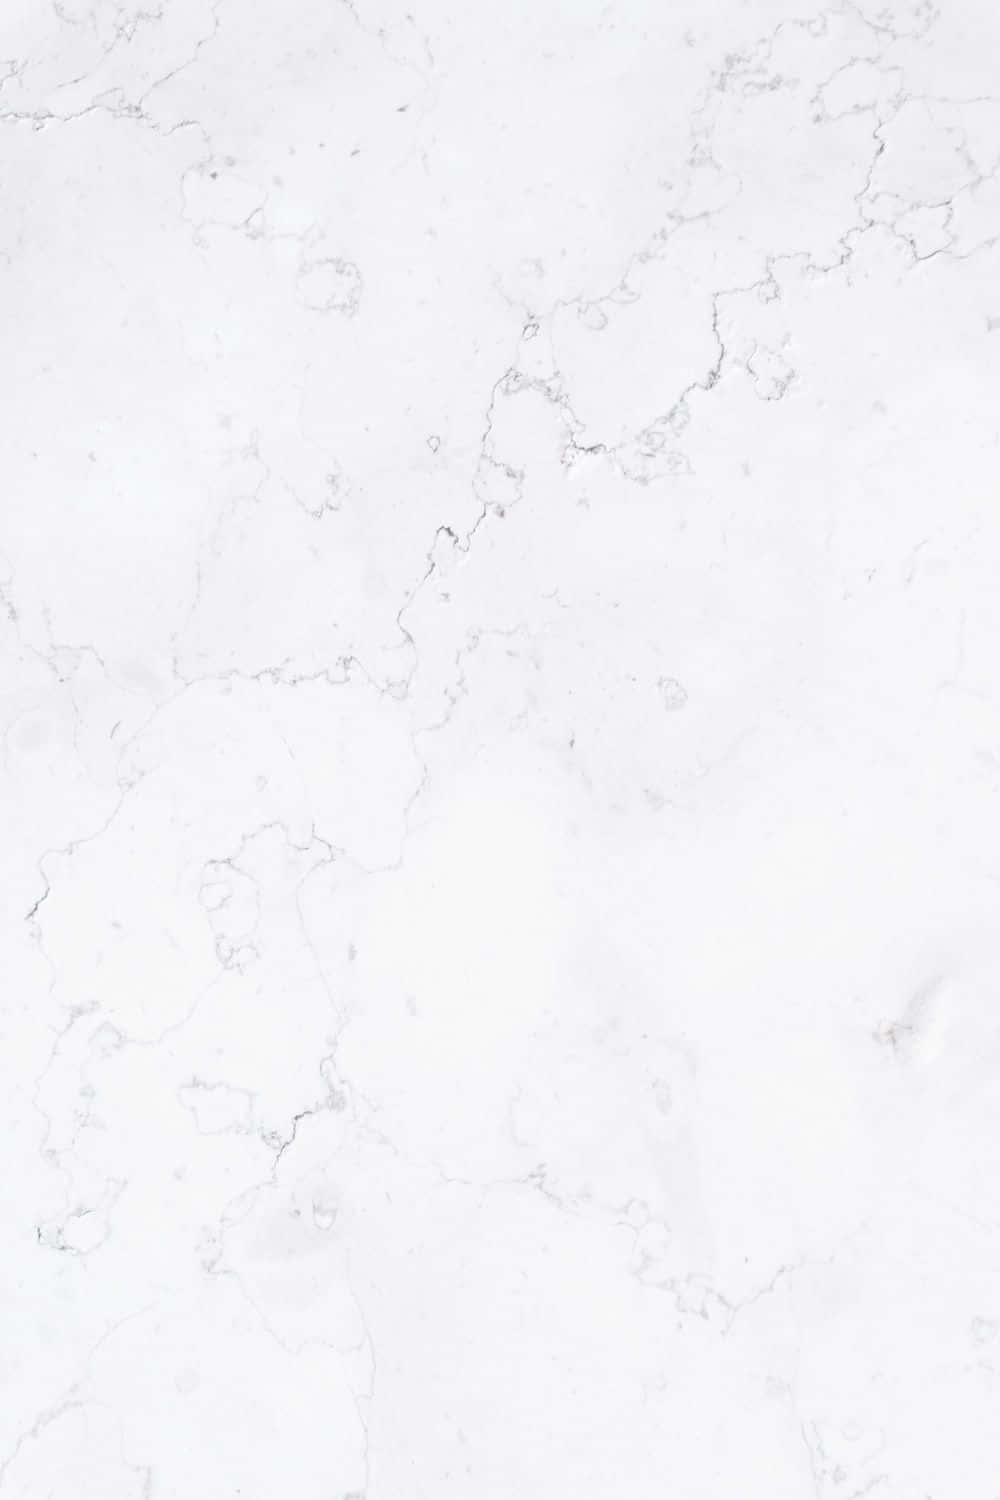 Marble Texture White Minimalistic Decorative Design Picture